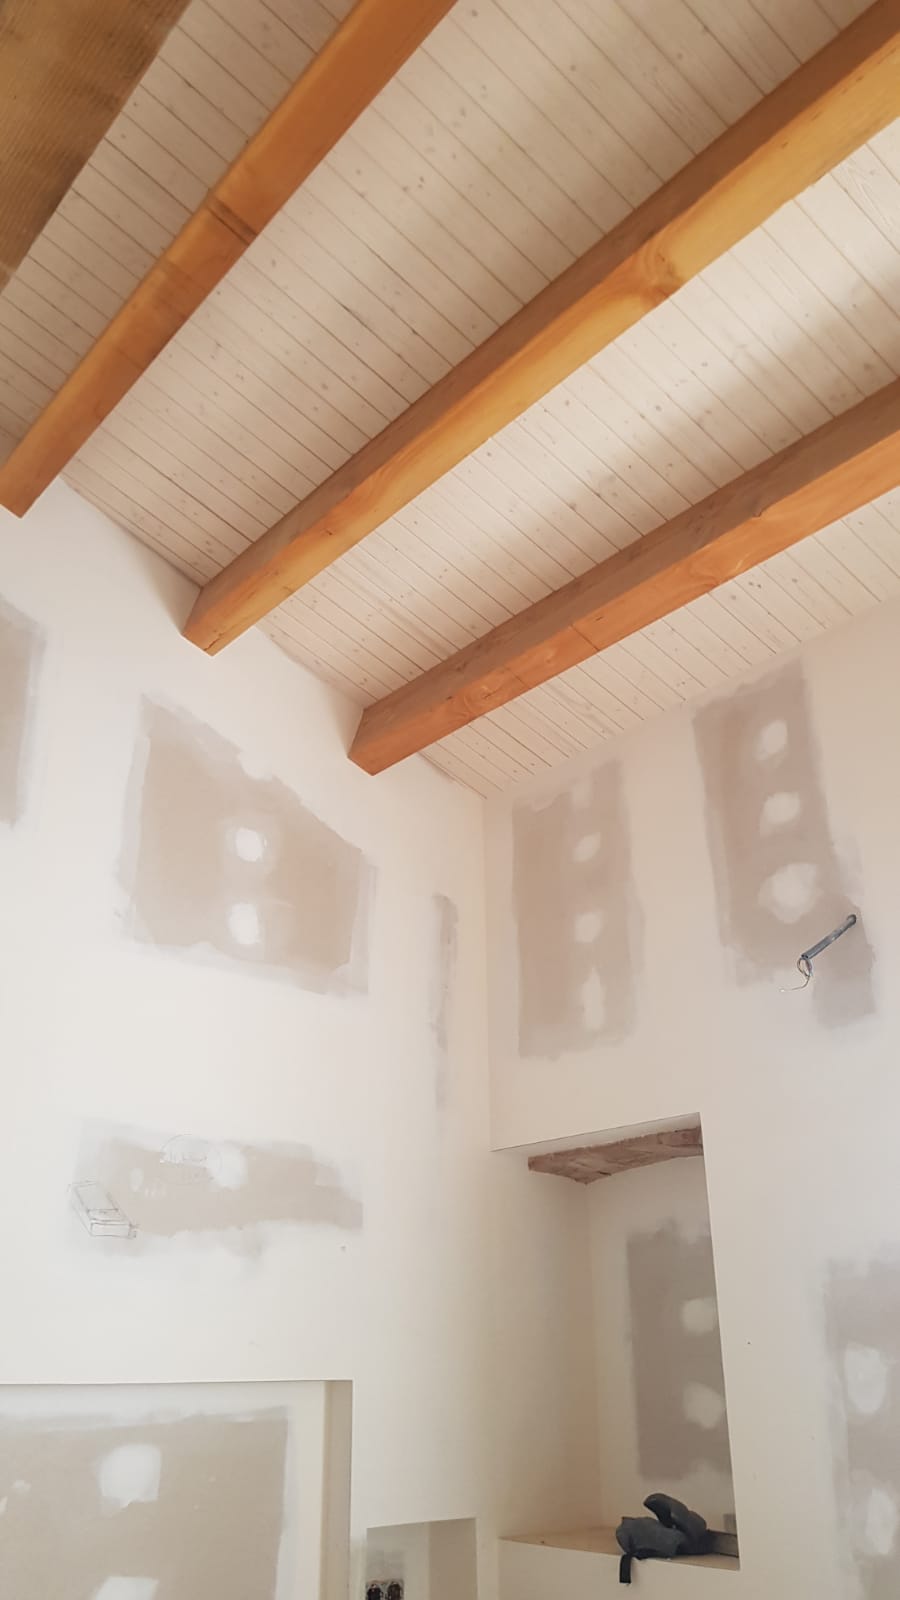 Complete renovation of 2 houses in Llançà